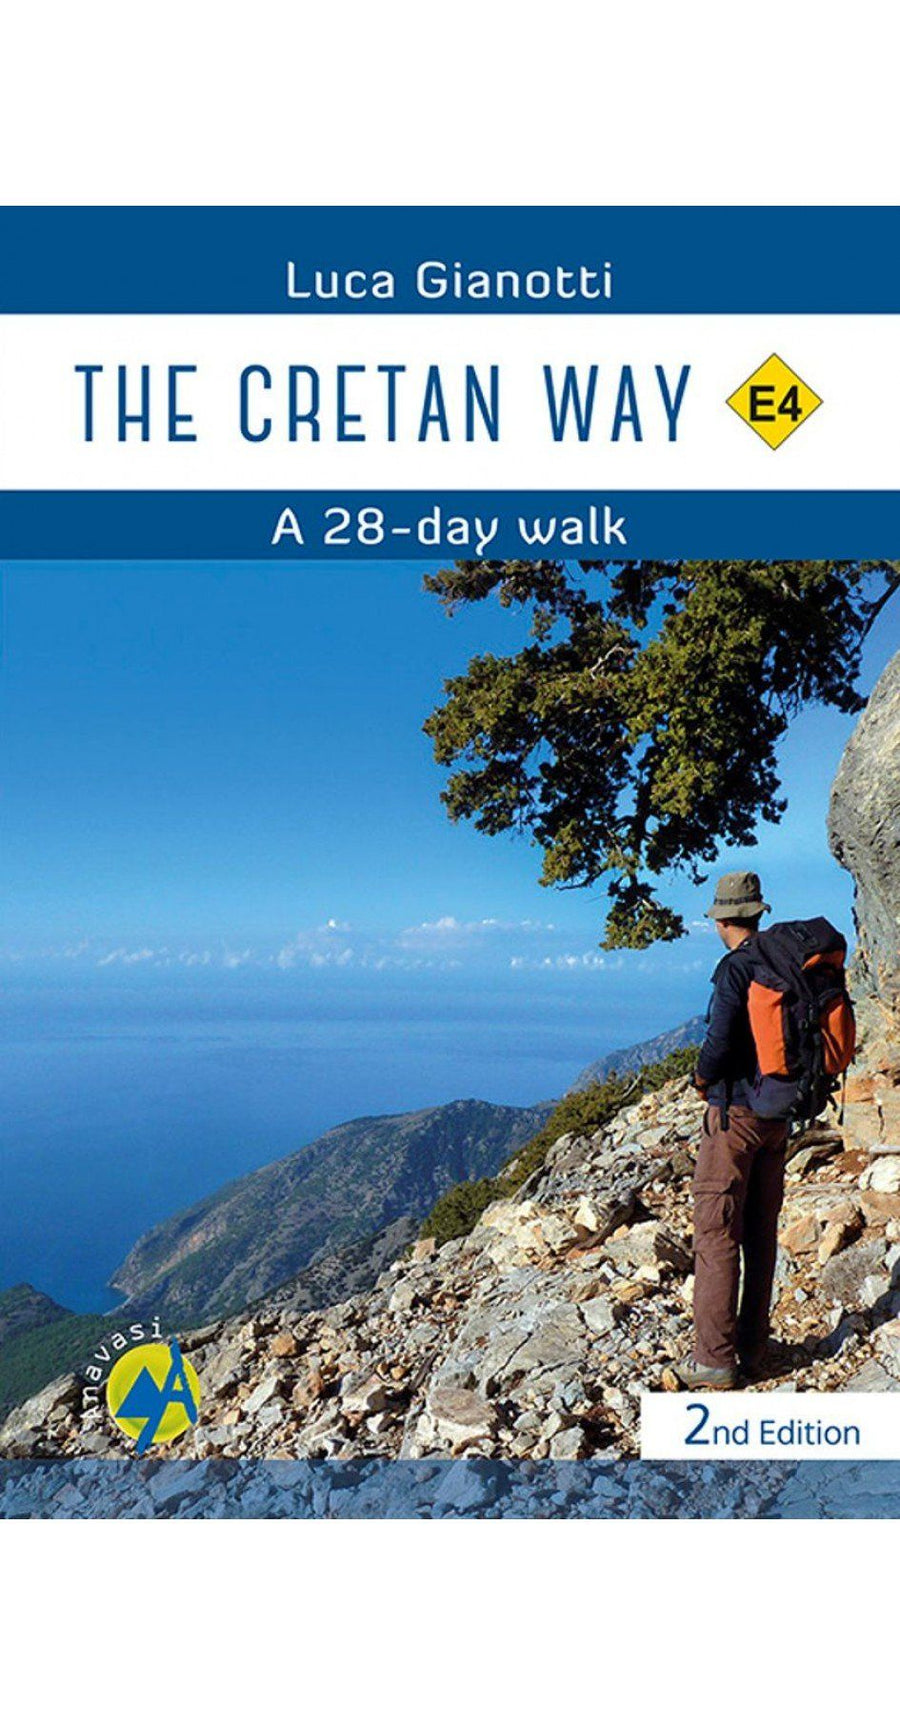 Guide de randonnées - Cretan Way, A 28-day walk along the E4 | Anavasi guide de randonnée Anavasi 